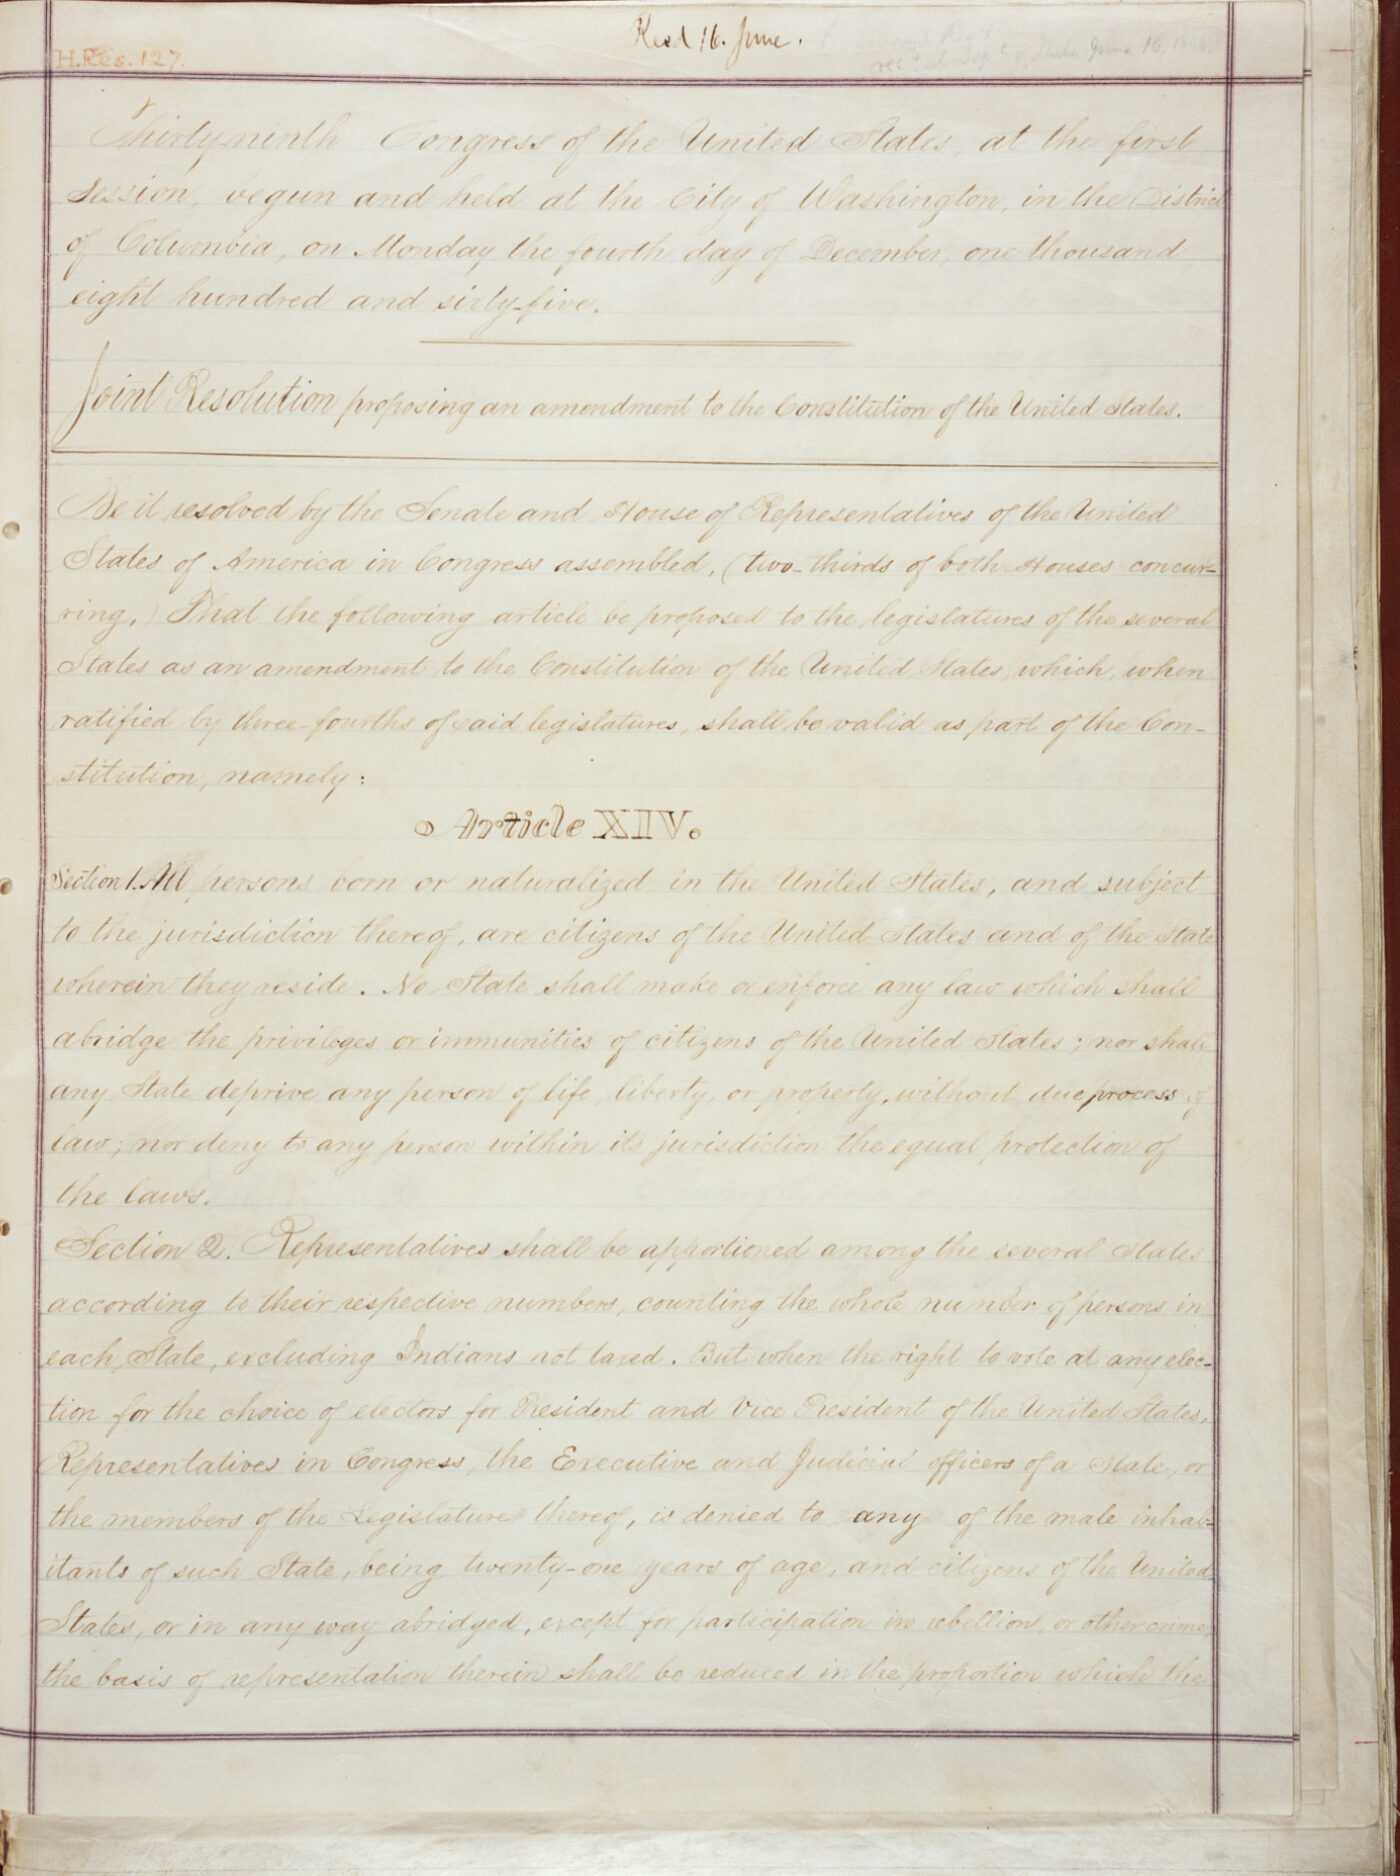 Image of 14th Amendment document